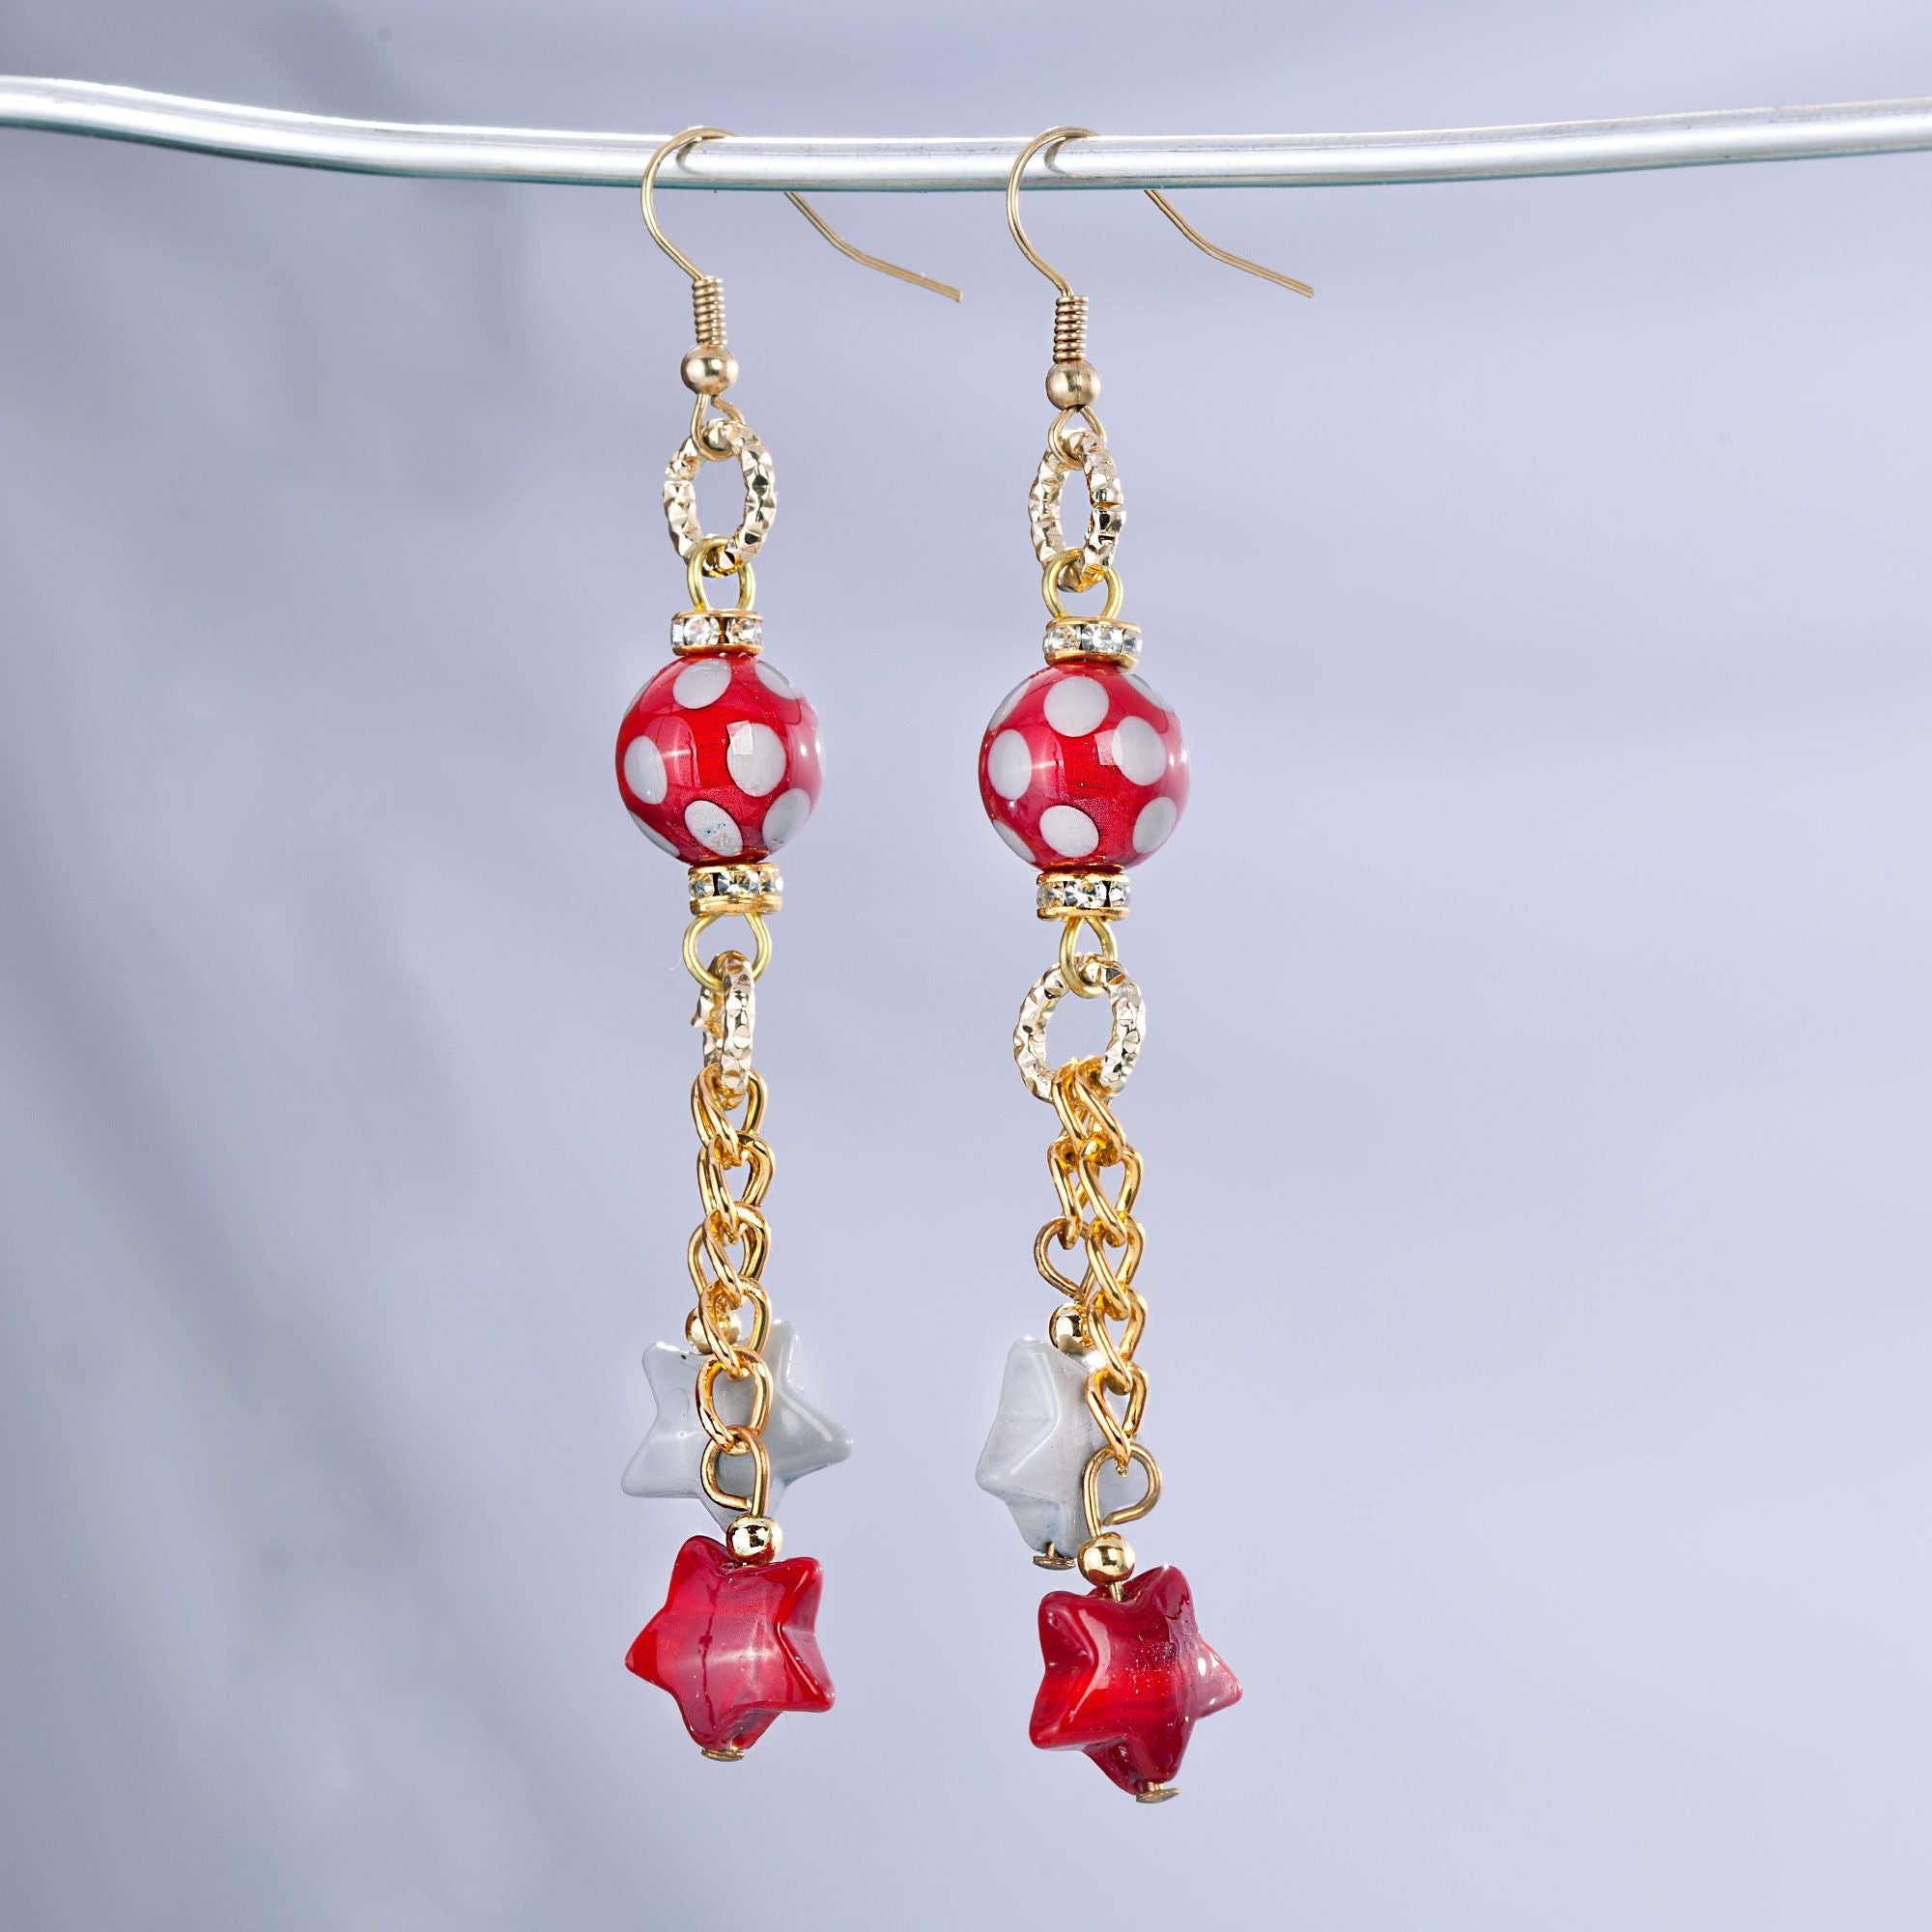 Murano Glass Red Star Earrings